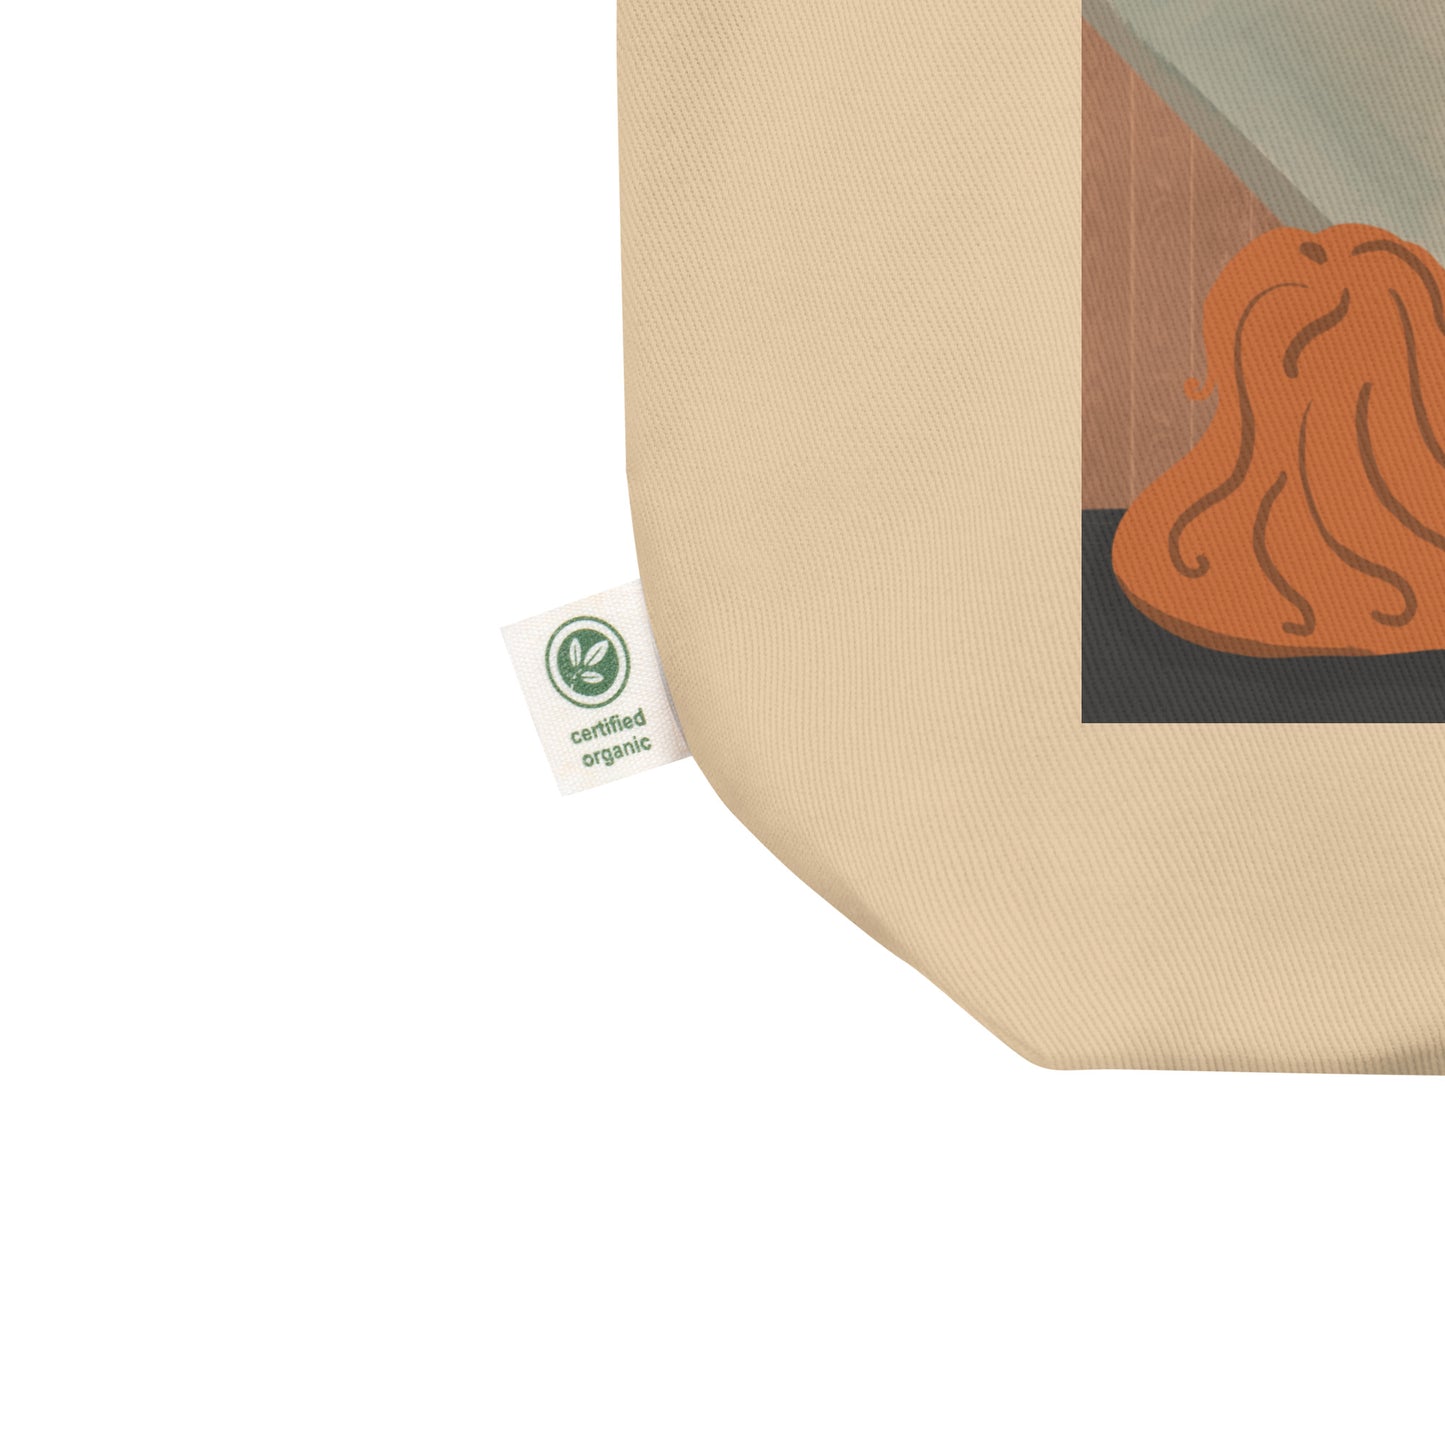 Tummy Time - Eco Tote Bag